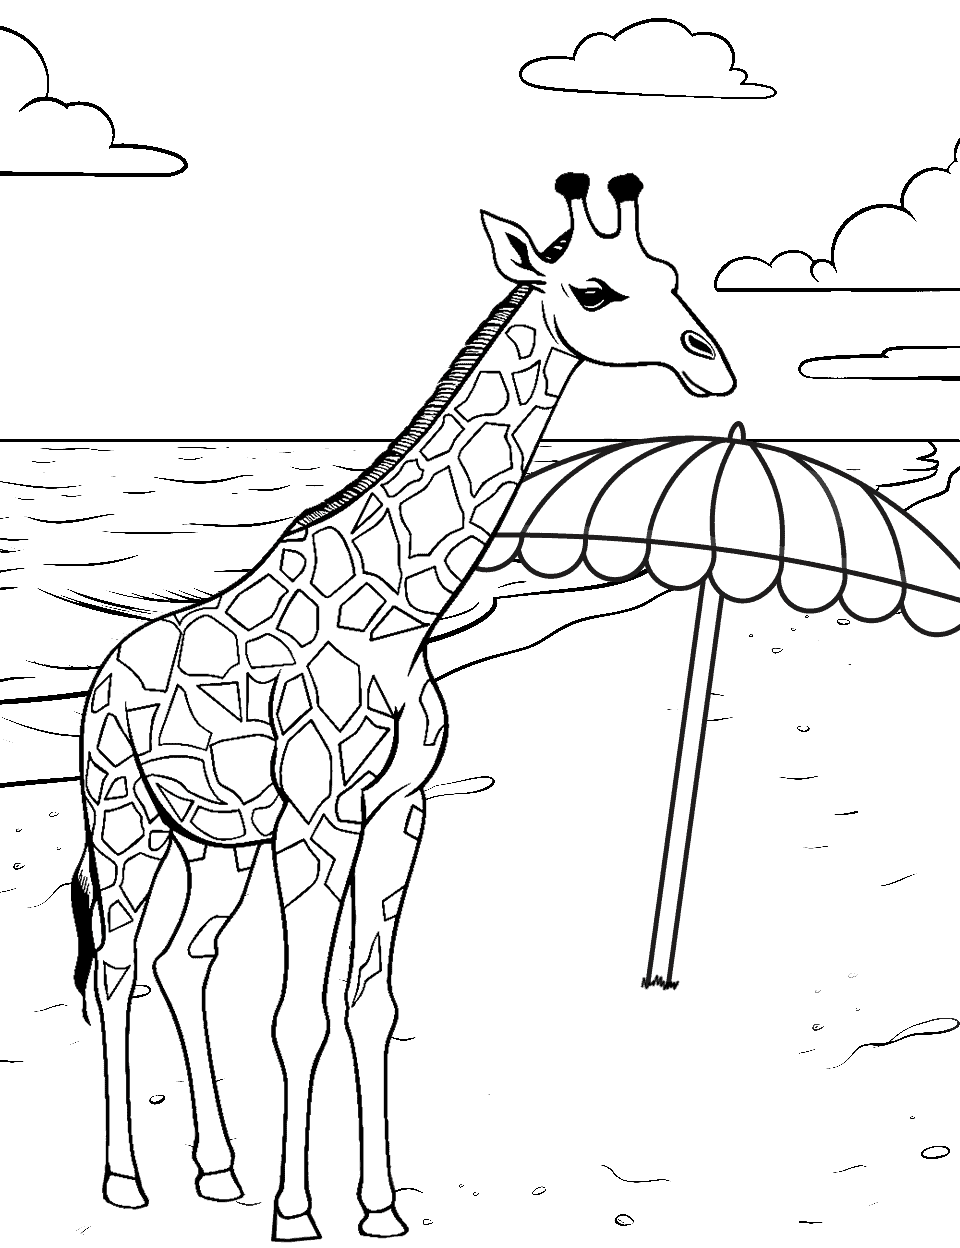 Beach Vacation Giraffe Coloring Page - A giraffe standing near a parasol on a sandy beach.